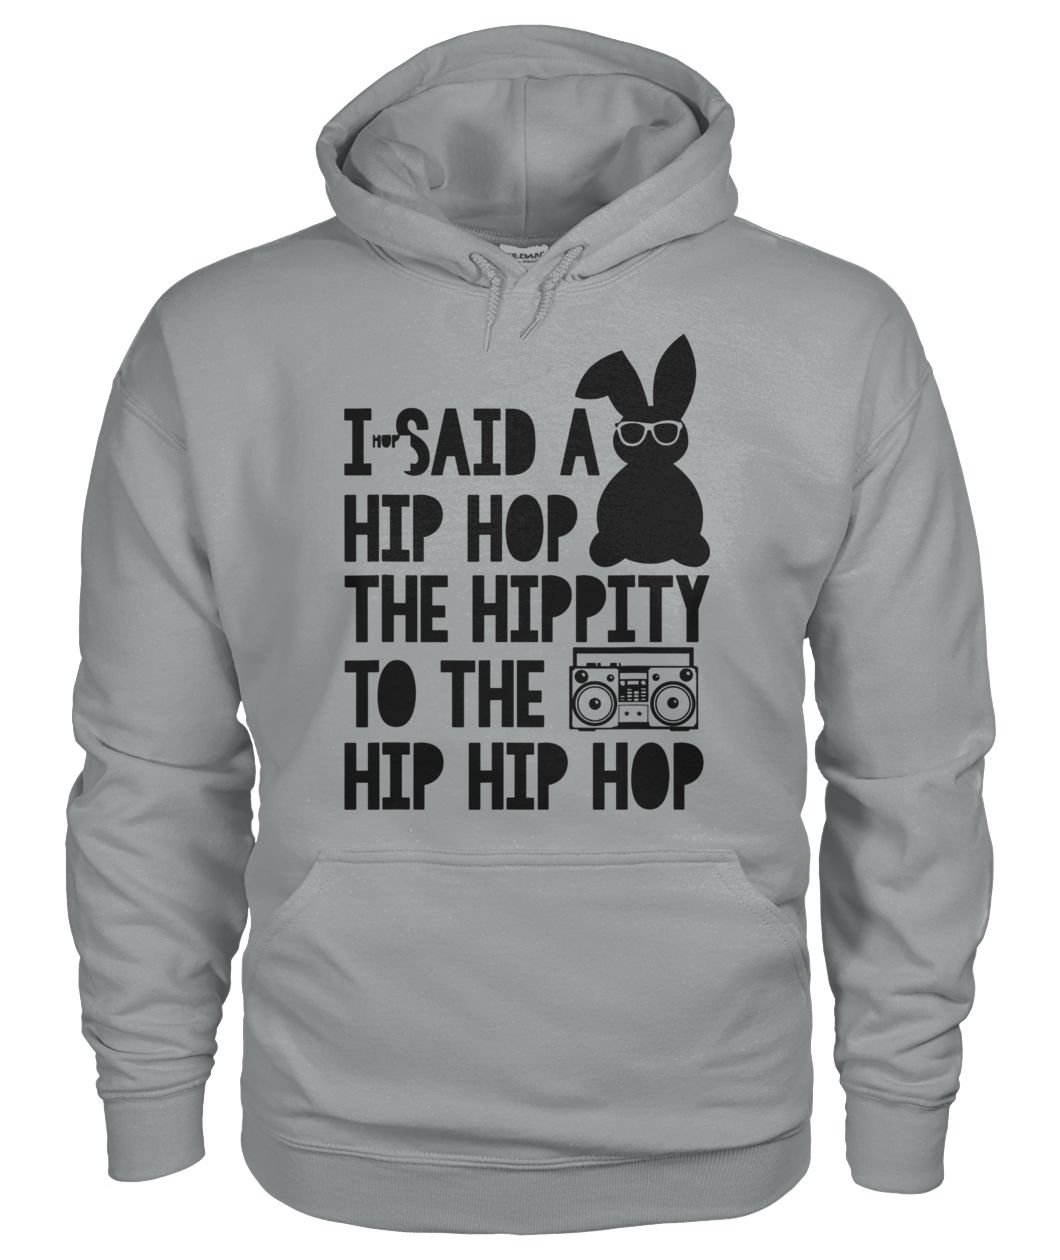 Easter bunny I said a hip-hop hippity to the hip hip hop gildan hoodie